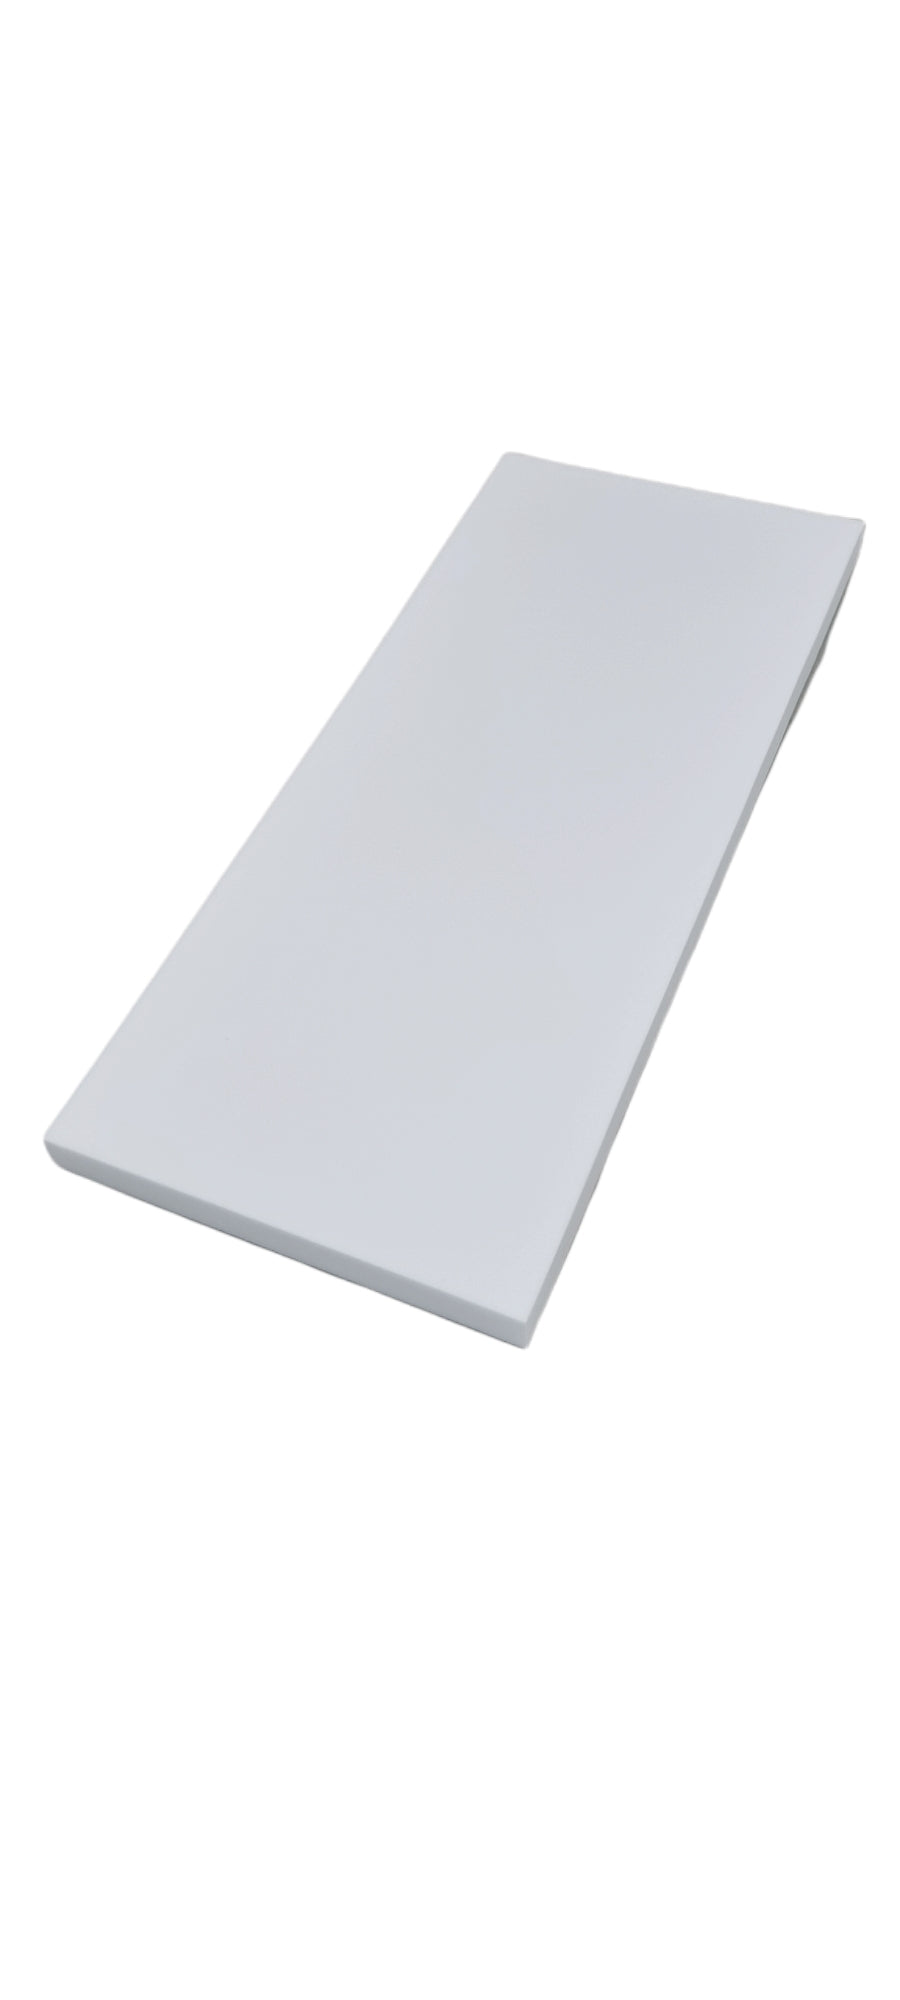 Pro-coustix Melaflex Evo Ceiling Panels Baffles Flat 1200x500x50mm